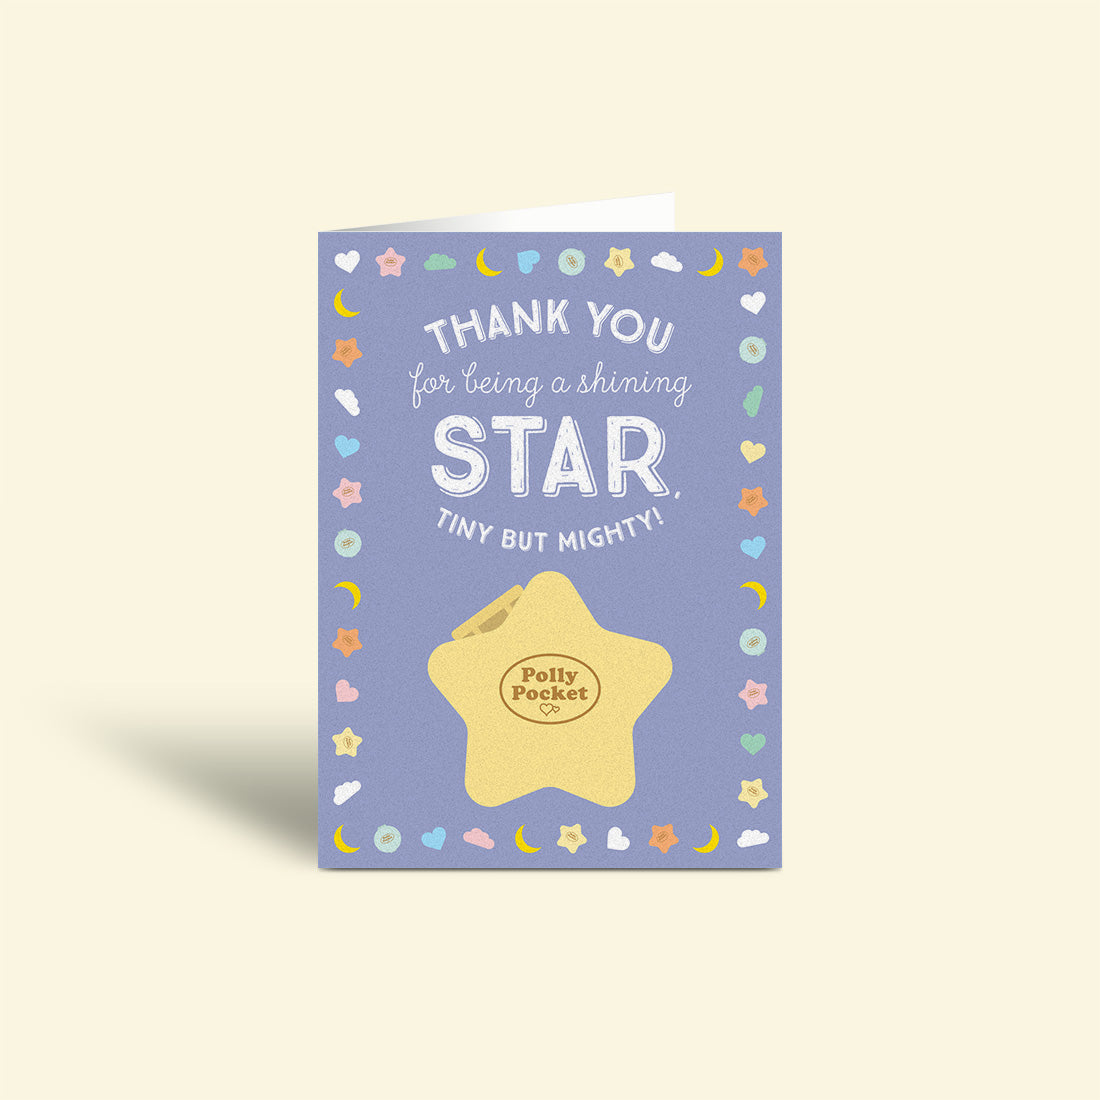 Thank you Card – Polly Pocket Star